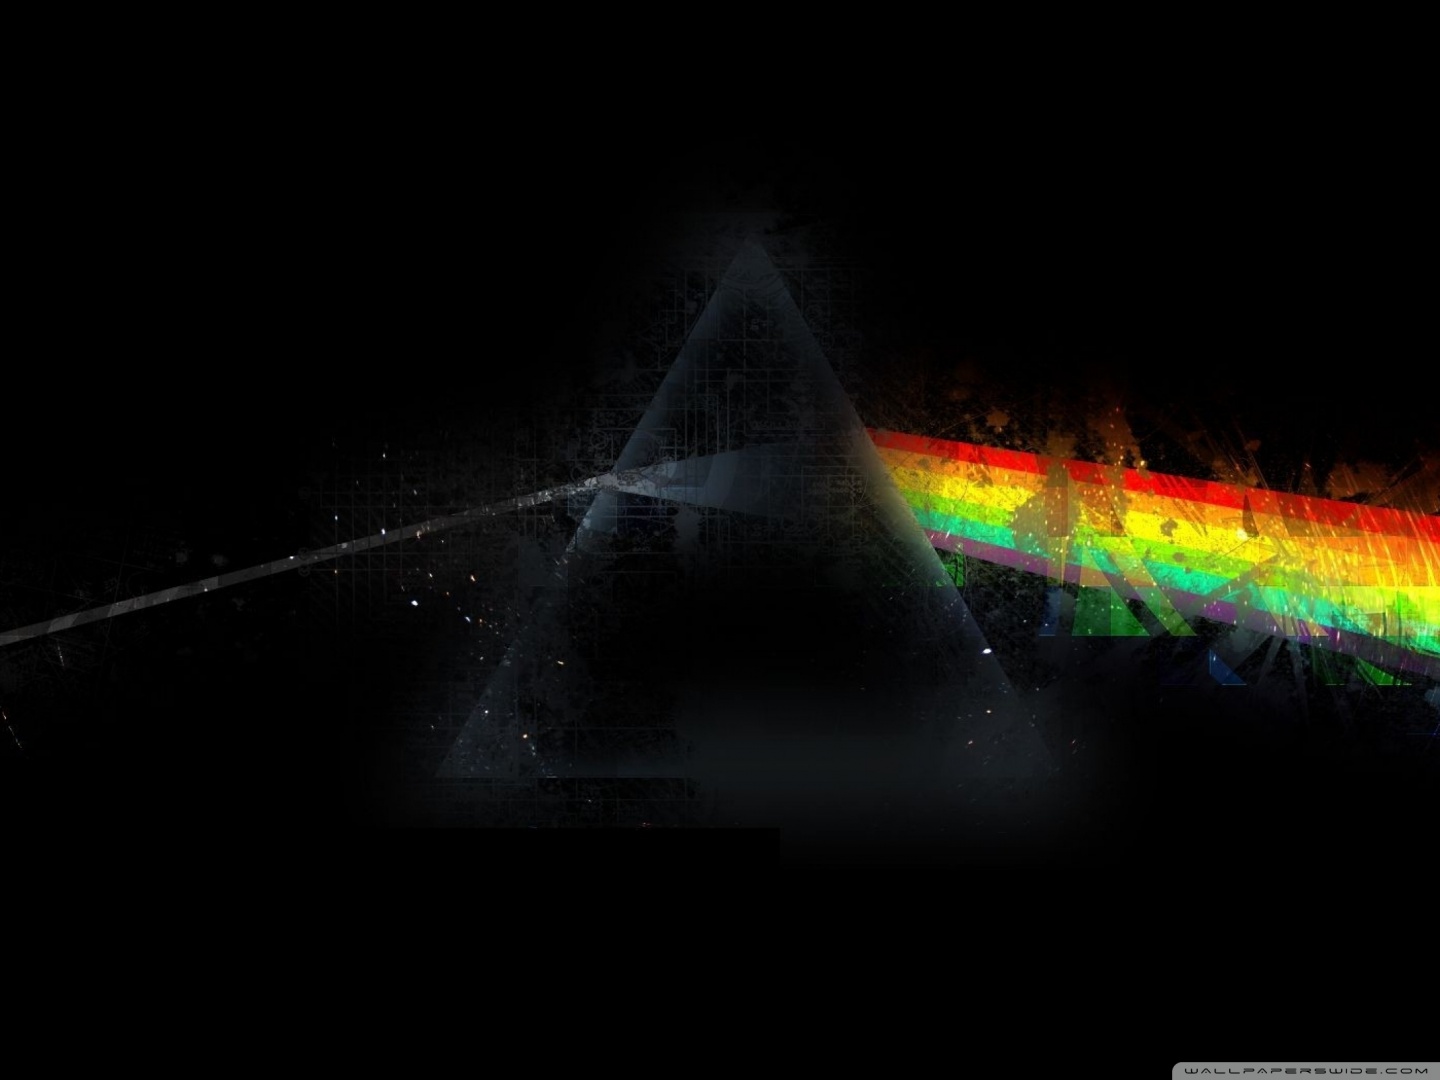 Pink Floyd Dispersion Ultra Hd Desktop Background Wallpaper For 4k Uhd Tv Multi Display Dual Monitor Tablet Smartphone